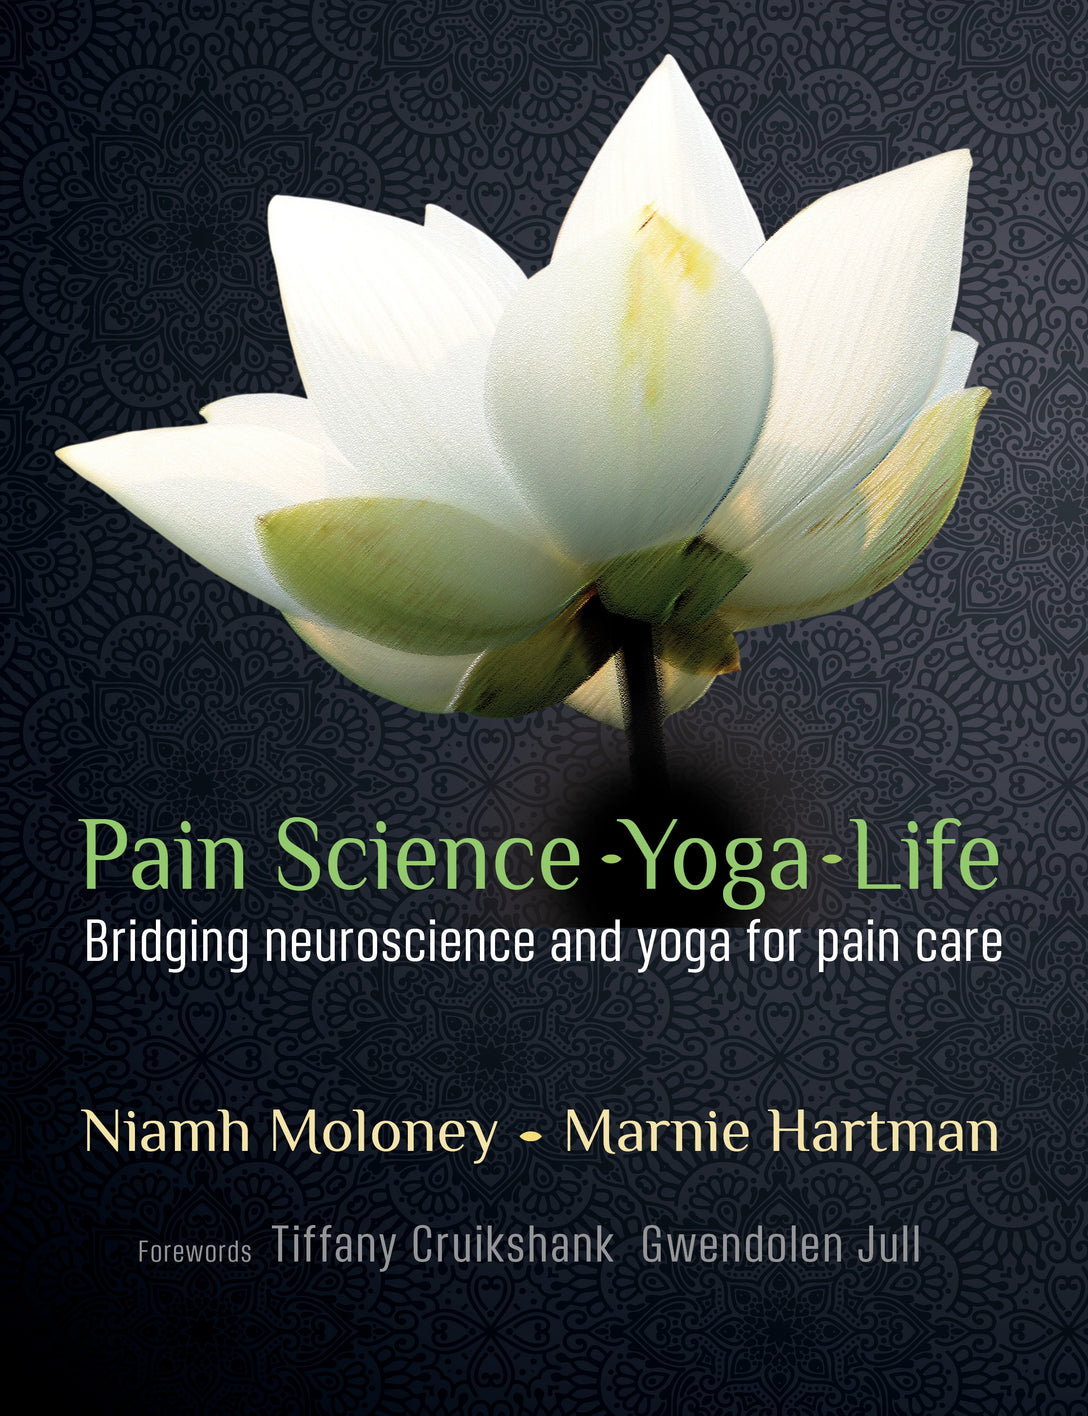 Pain Science - Yoga - Life by Marnie Hartman, Niamh Moloney